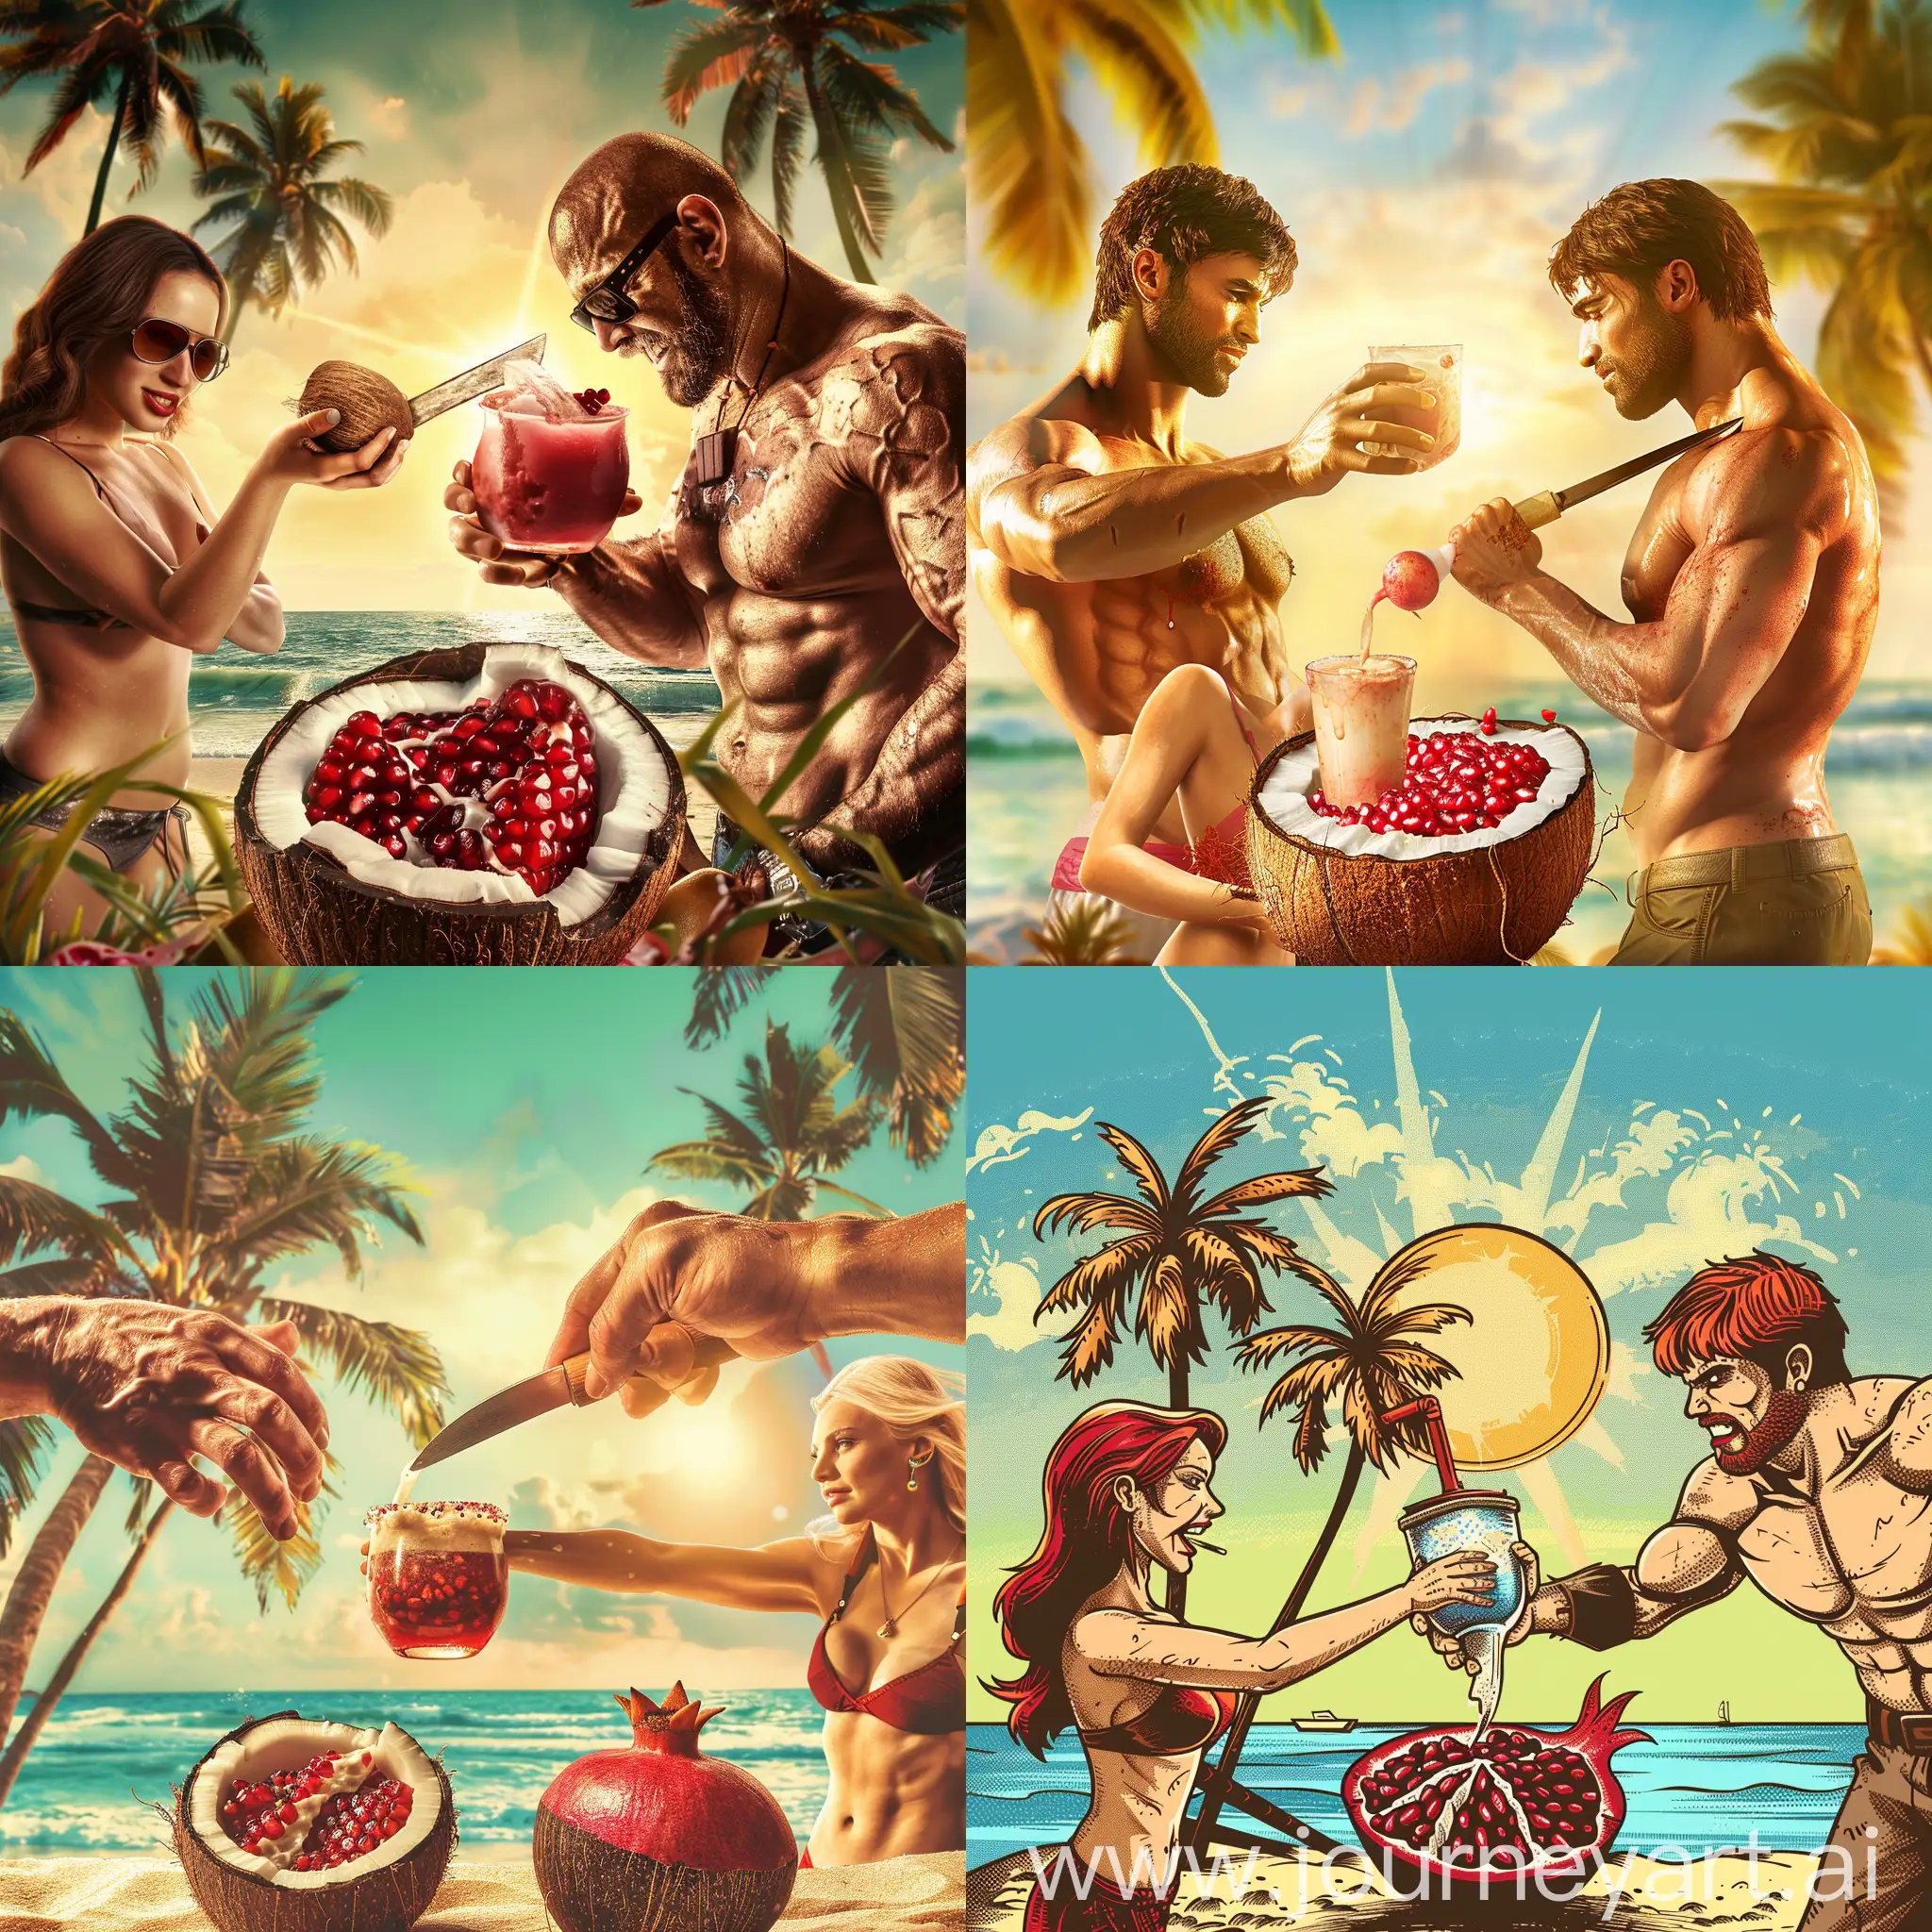 Tropical-Beach-Scene-MacheteWielding-Tough-Guy-Making-Fresh-Coconut-Drink